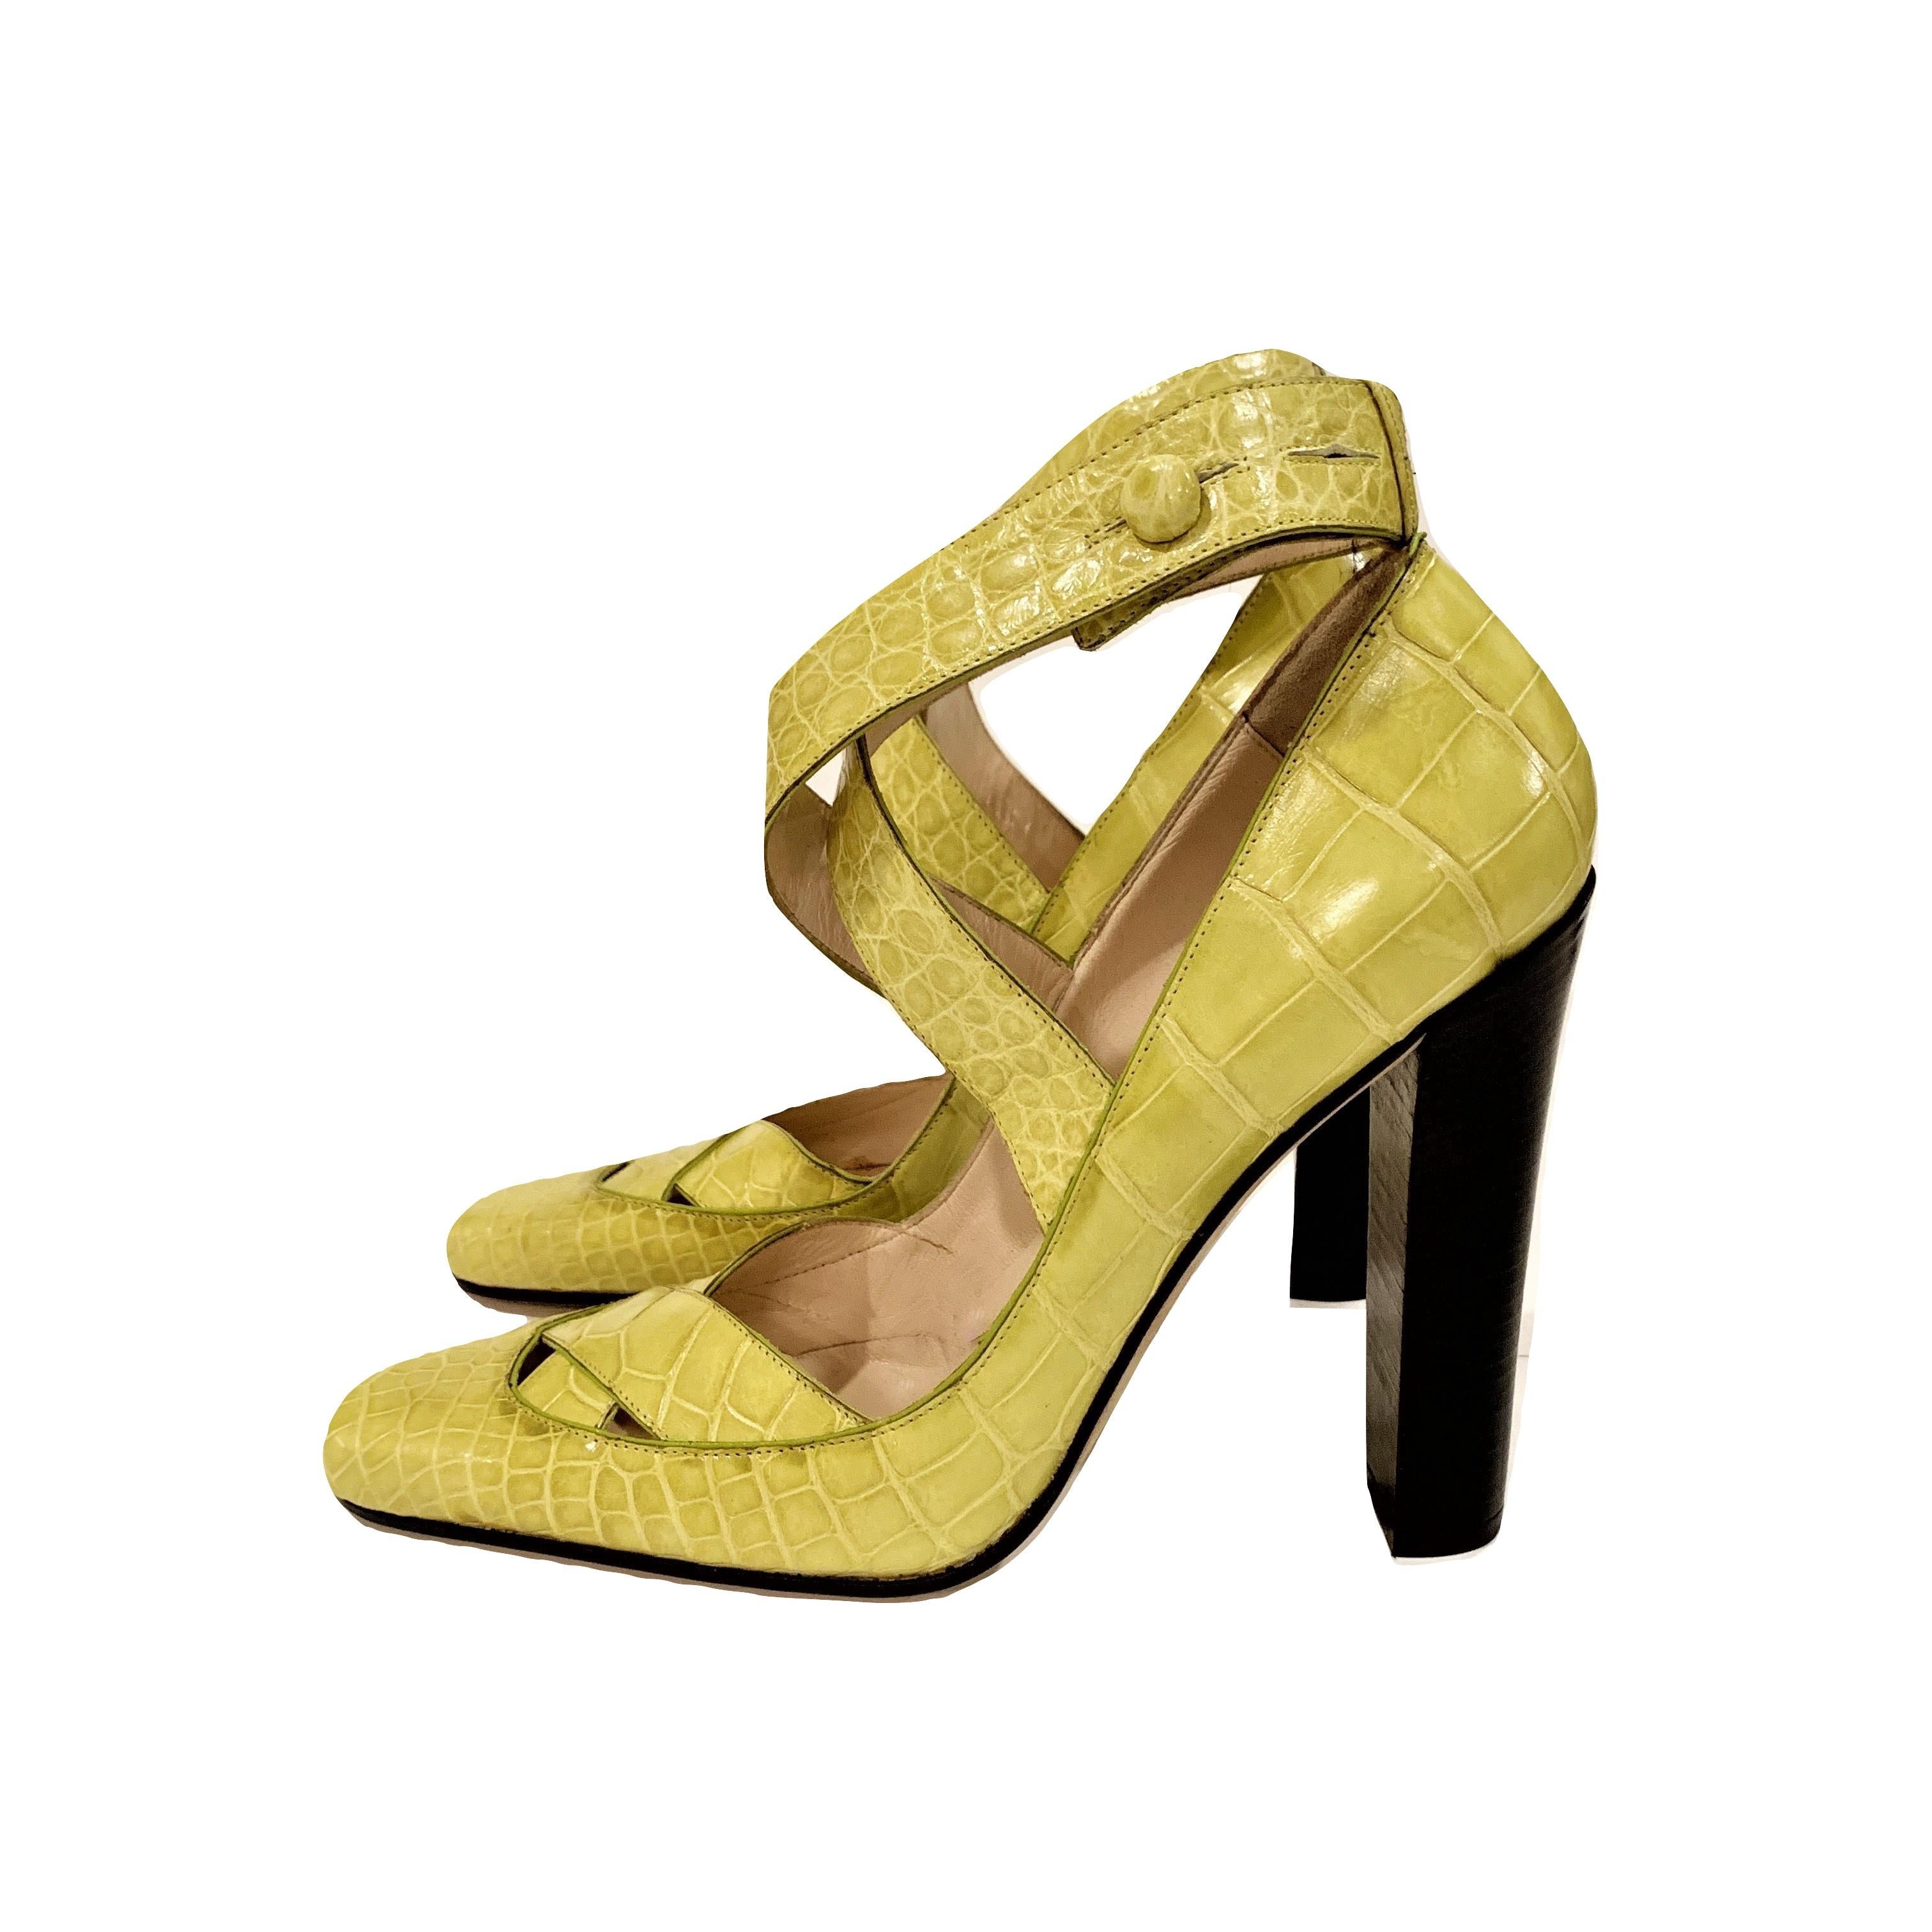 Neu Tom Ford for Gucci Krokodil Ballerina Heels Pumps in Light Chartreuse Sz 39 1